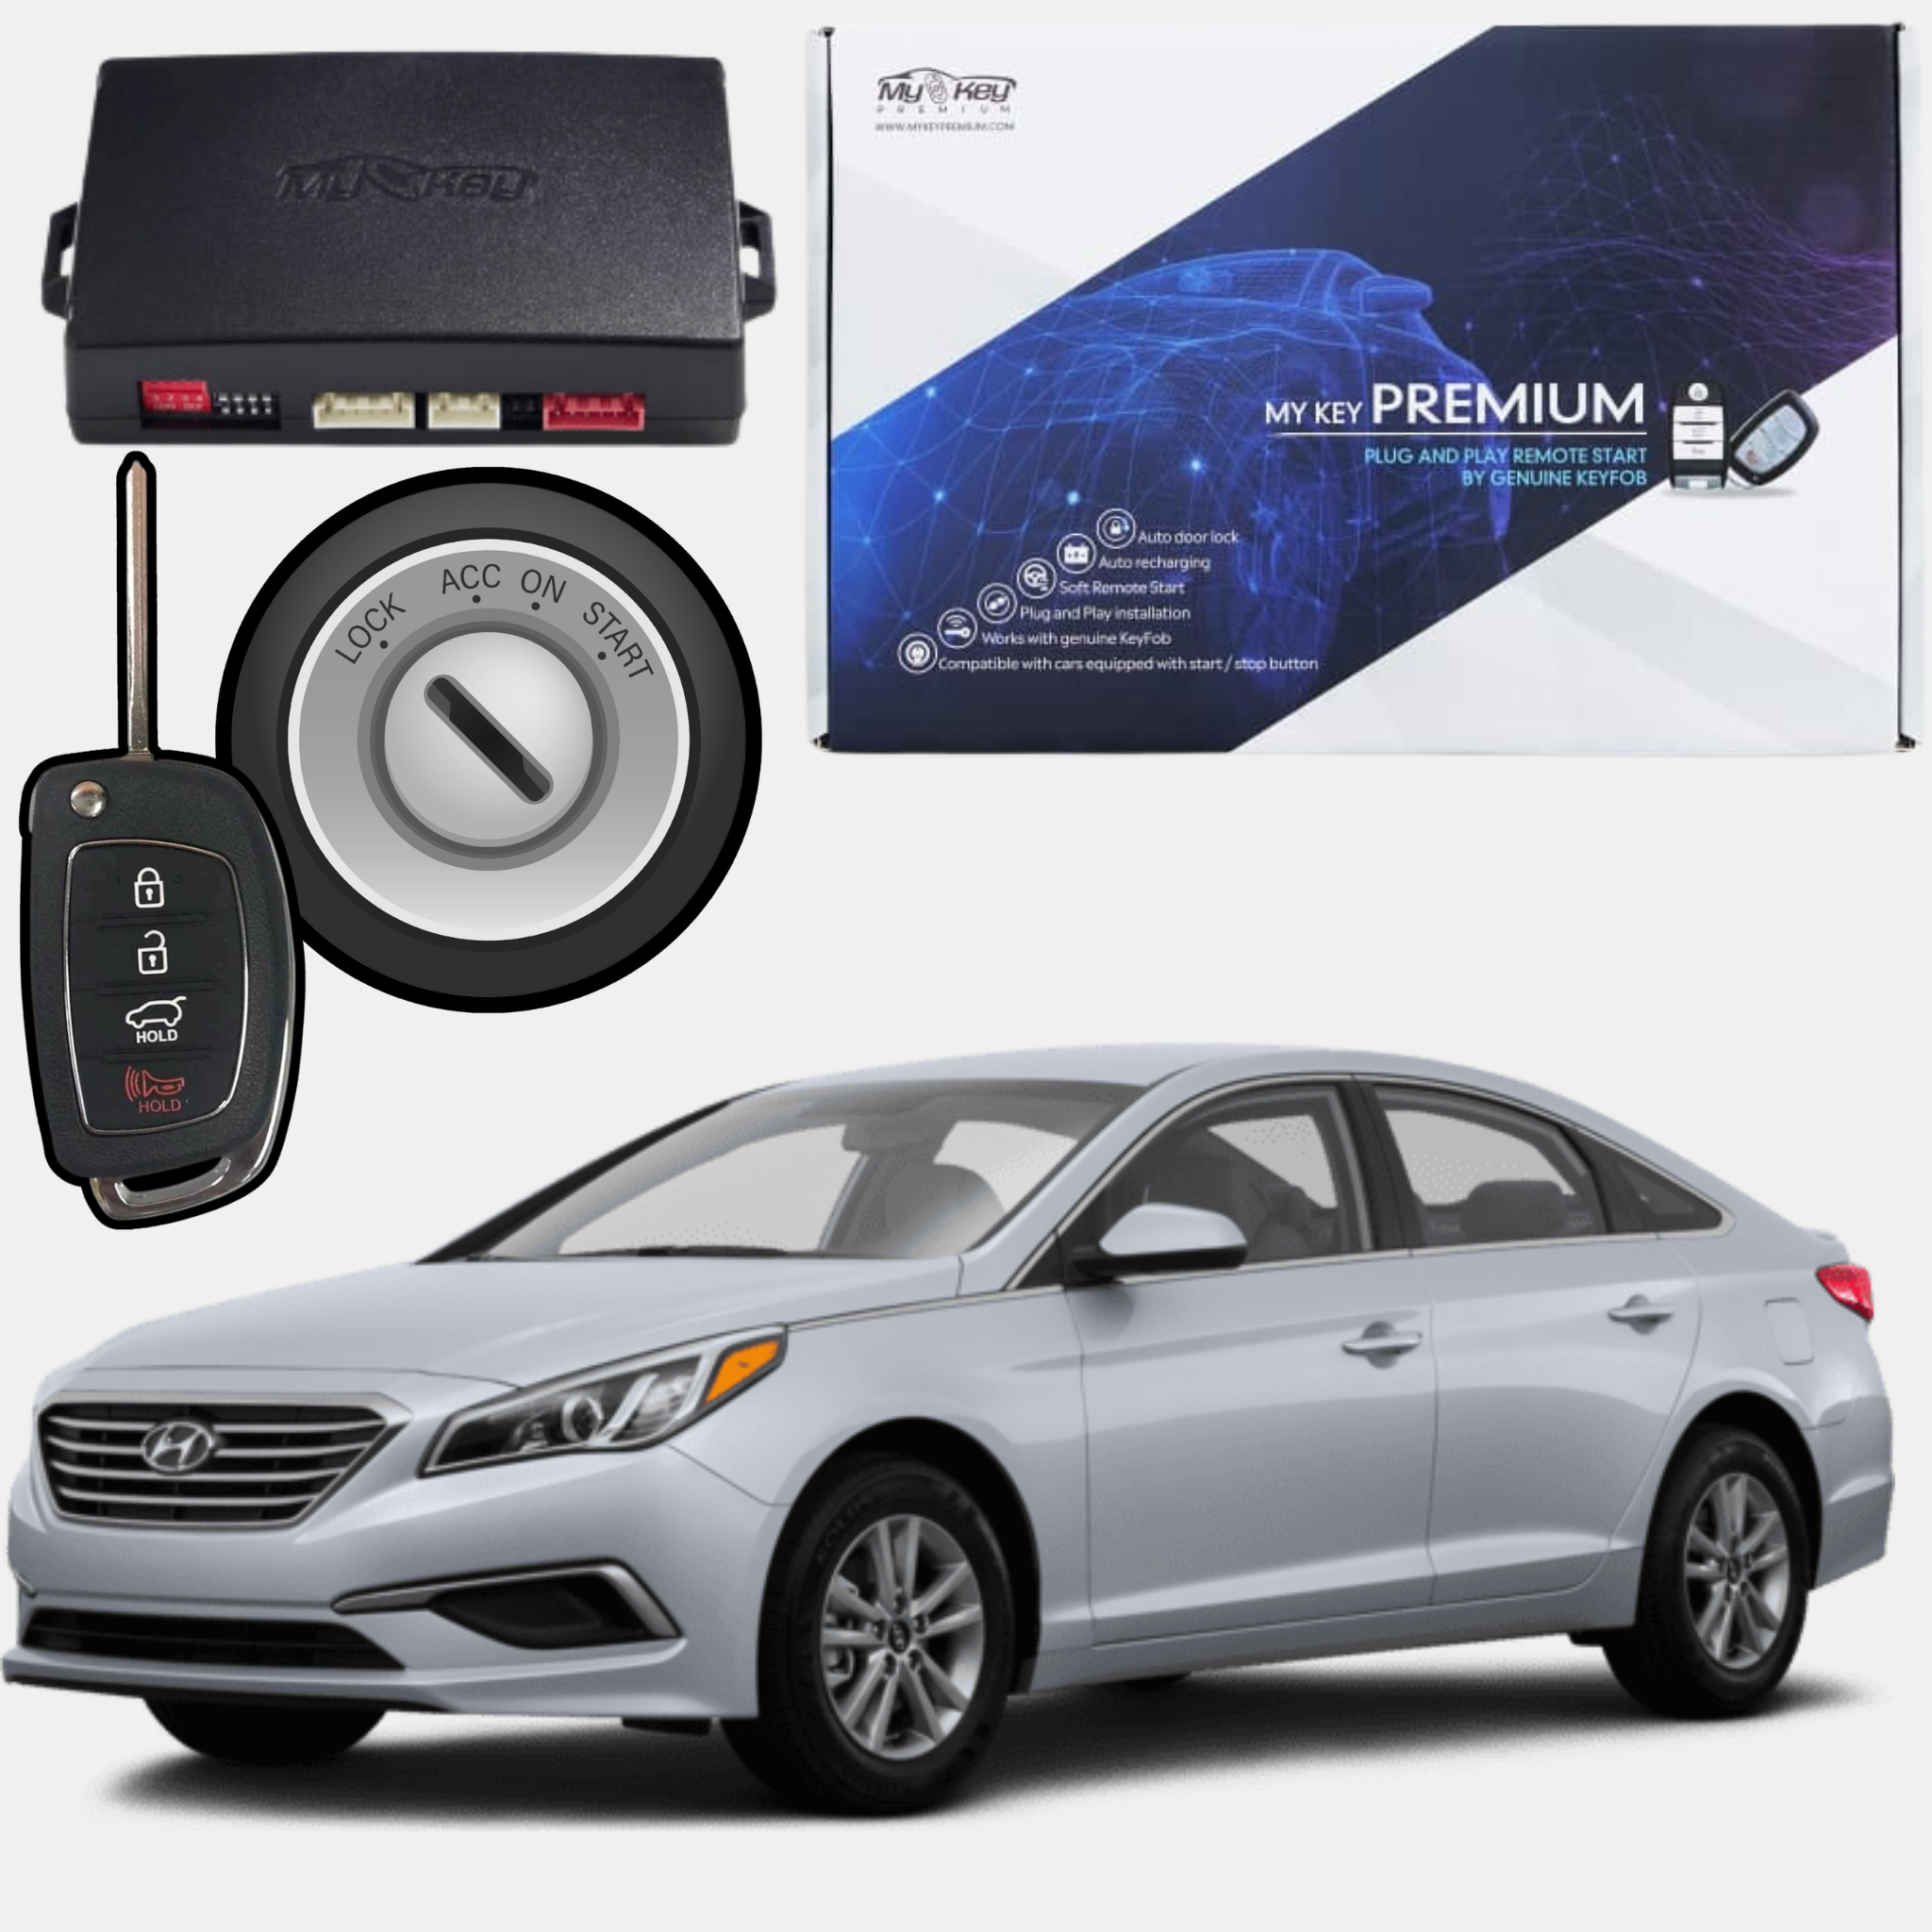 hyundai sonata lf 2015-2019 key ignition remote engine auto starter kit my key premium oem key fob usage 